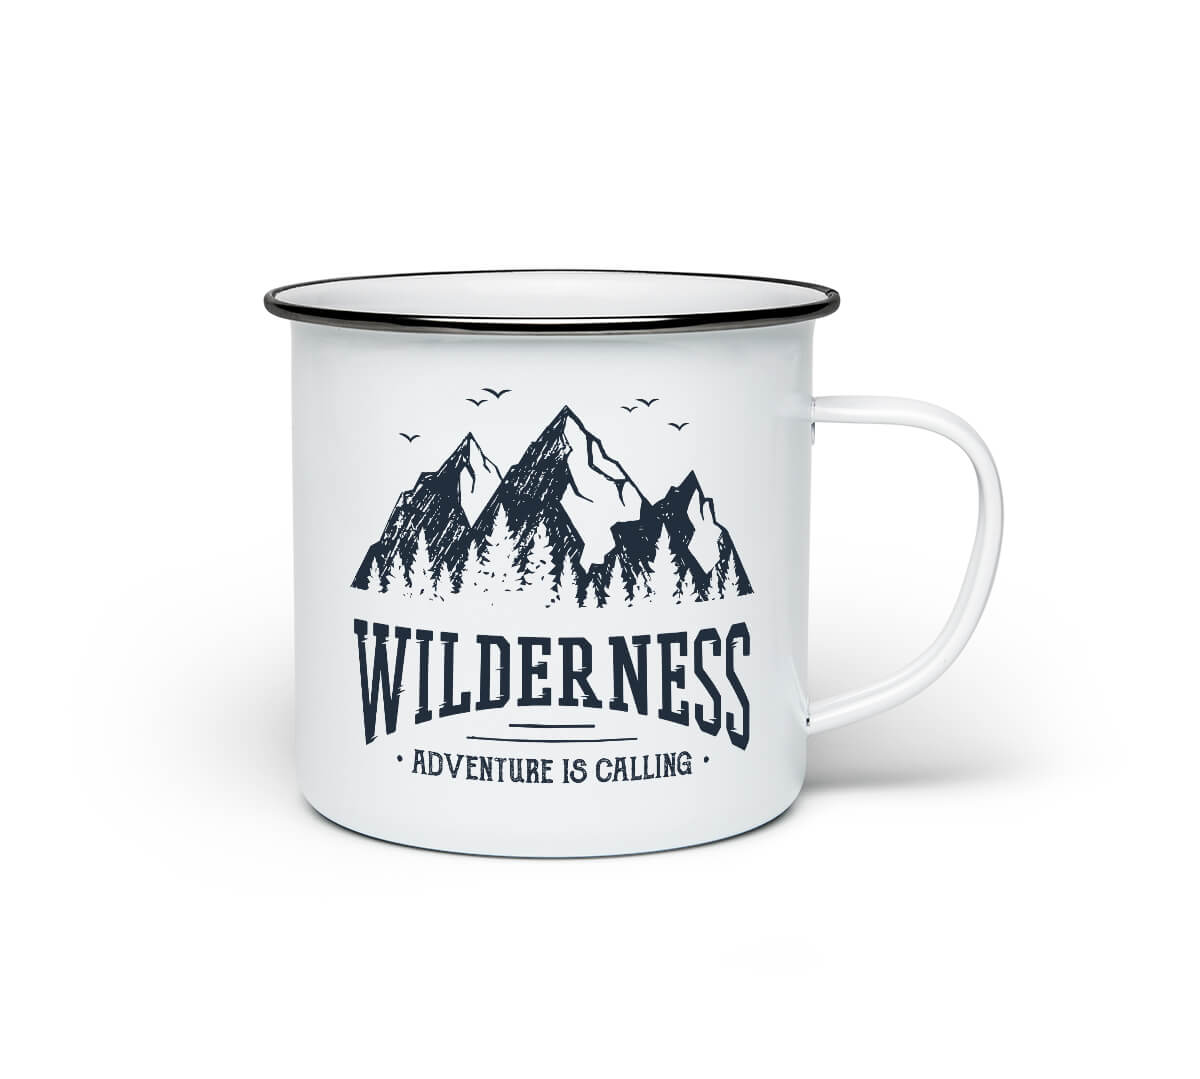 https://shop.thetravelbible.com/wp-content/uploads/2018/03/wilderness-camp-mug.jpg